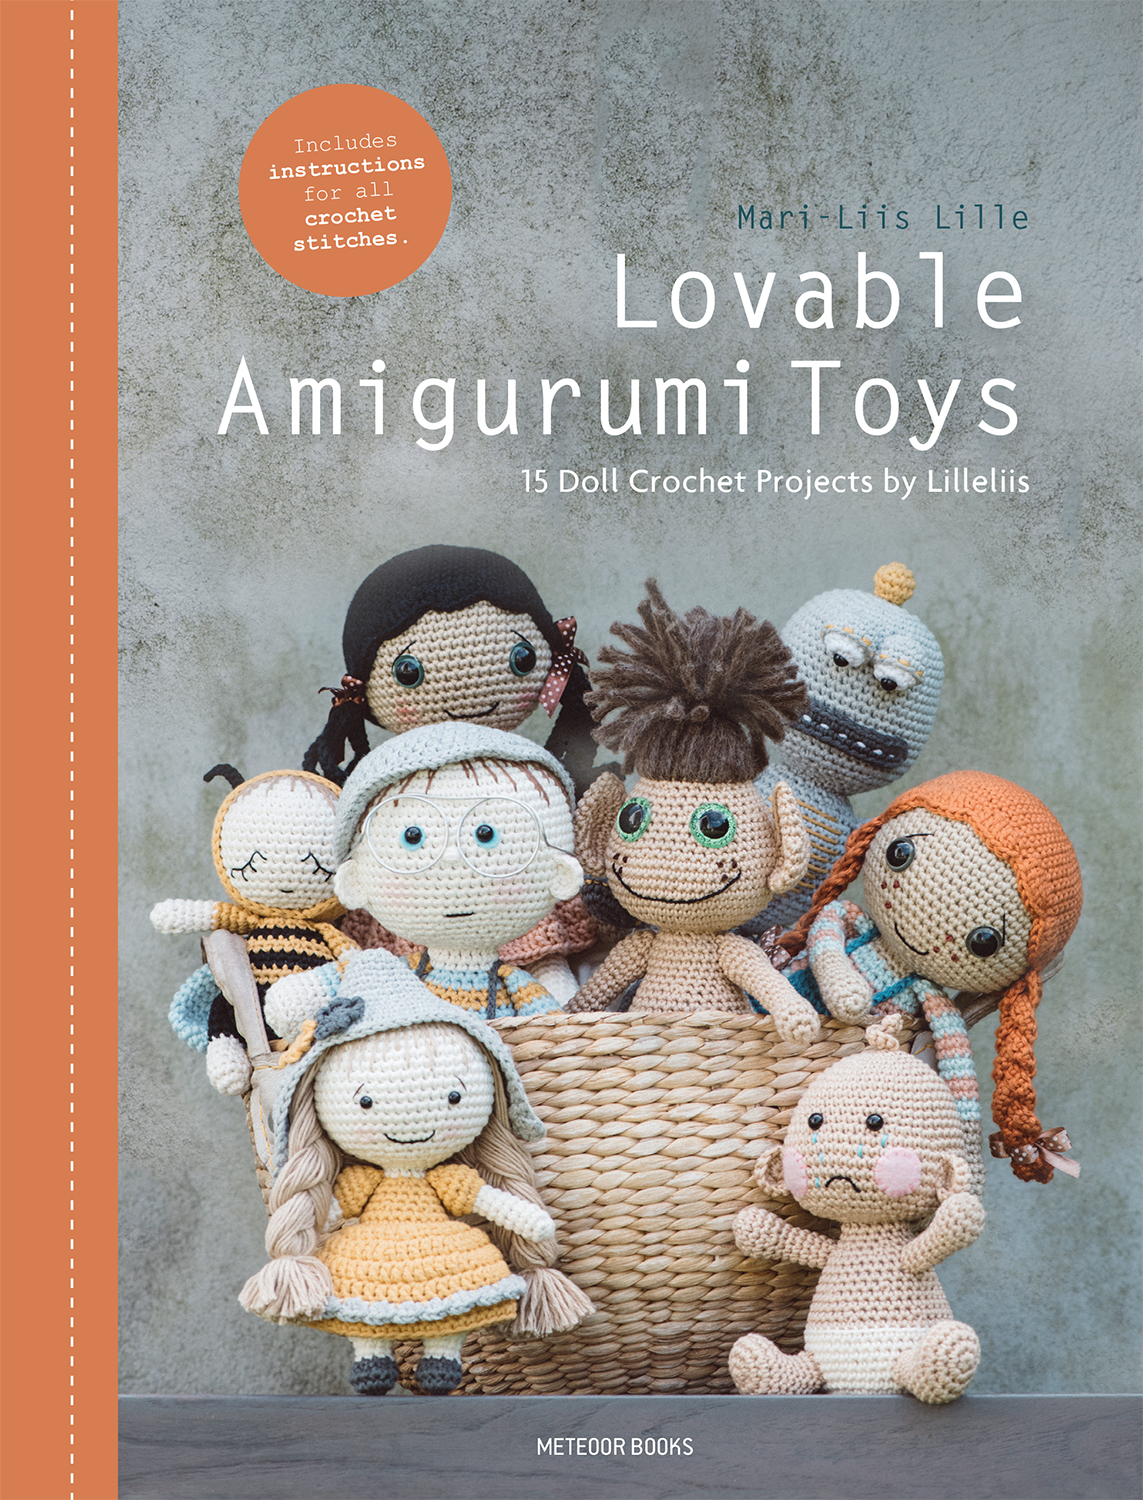 Lovable Amigurumi Toys - author signed book